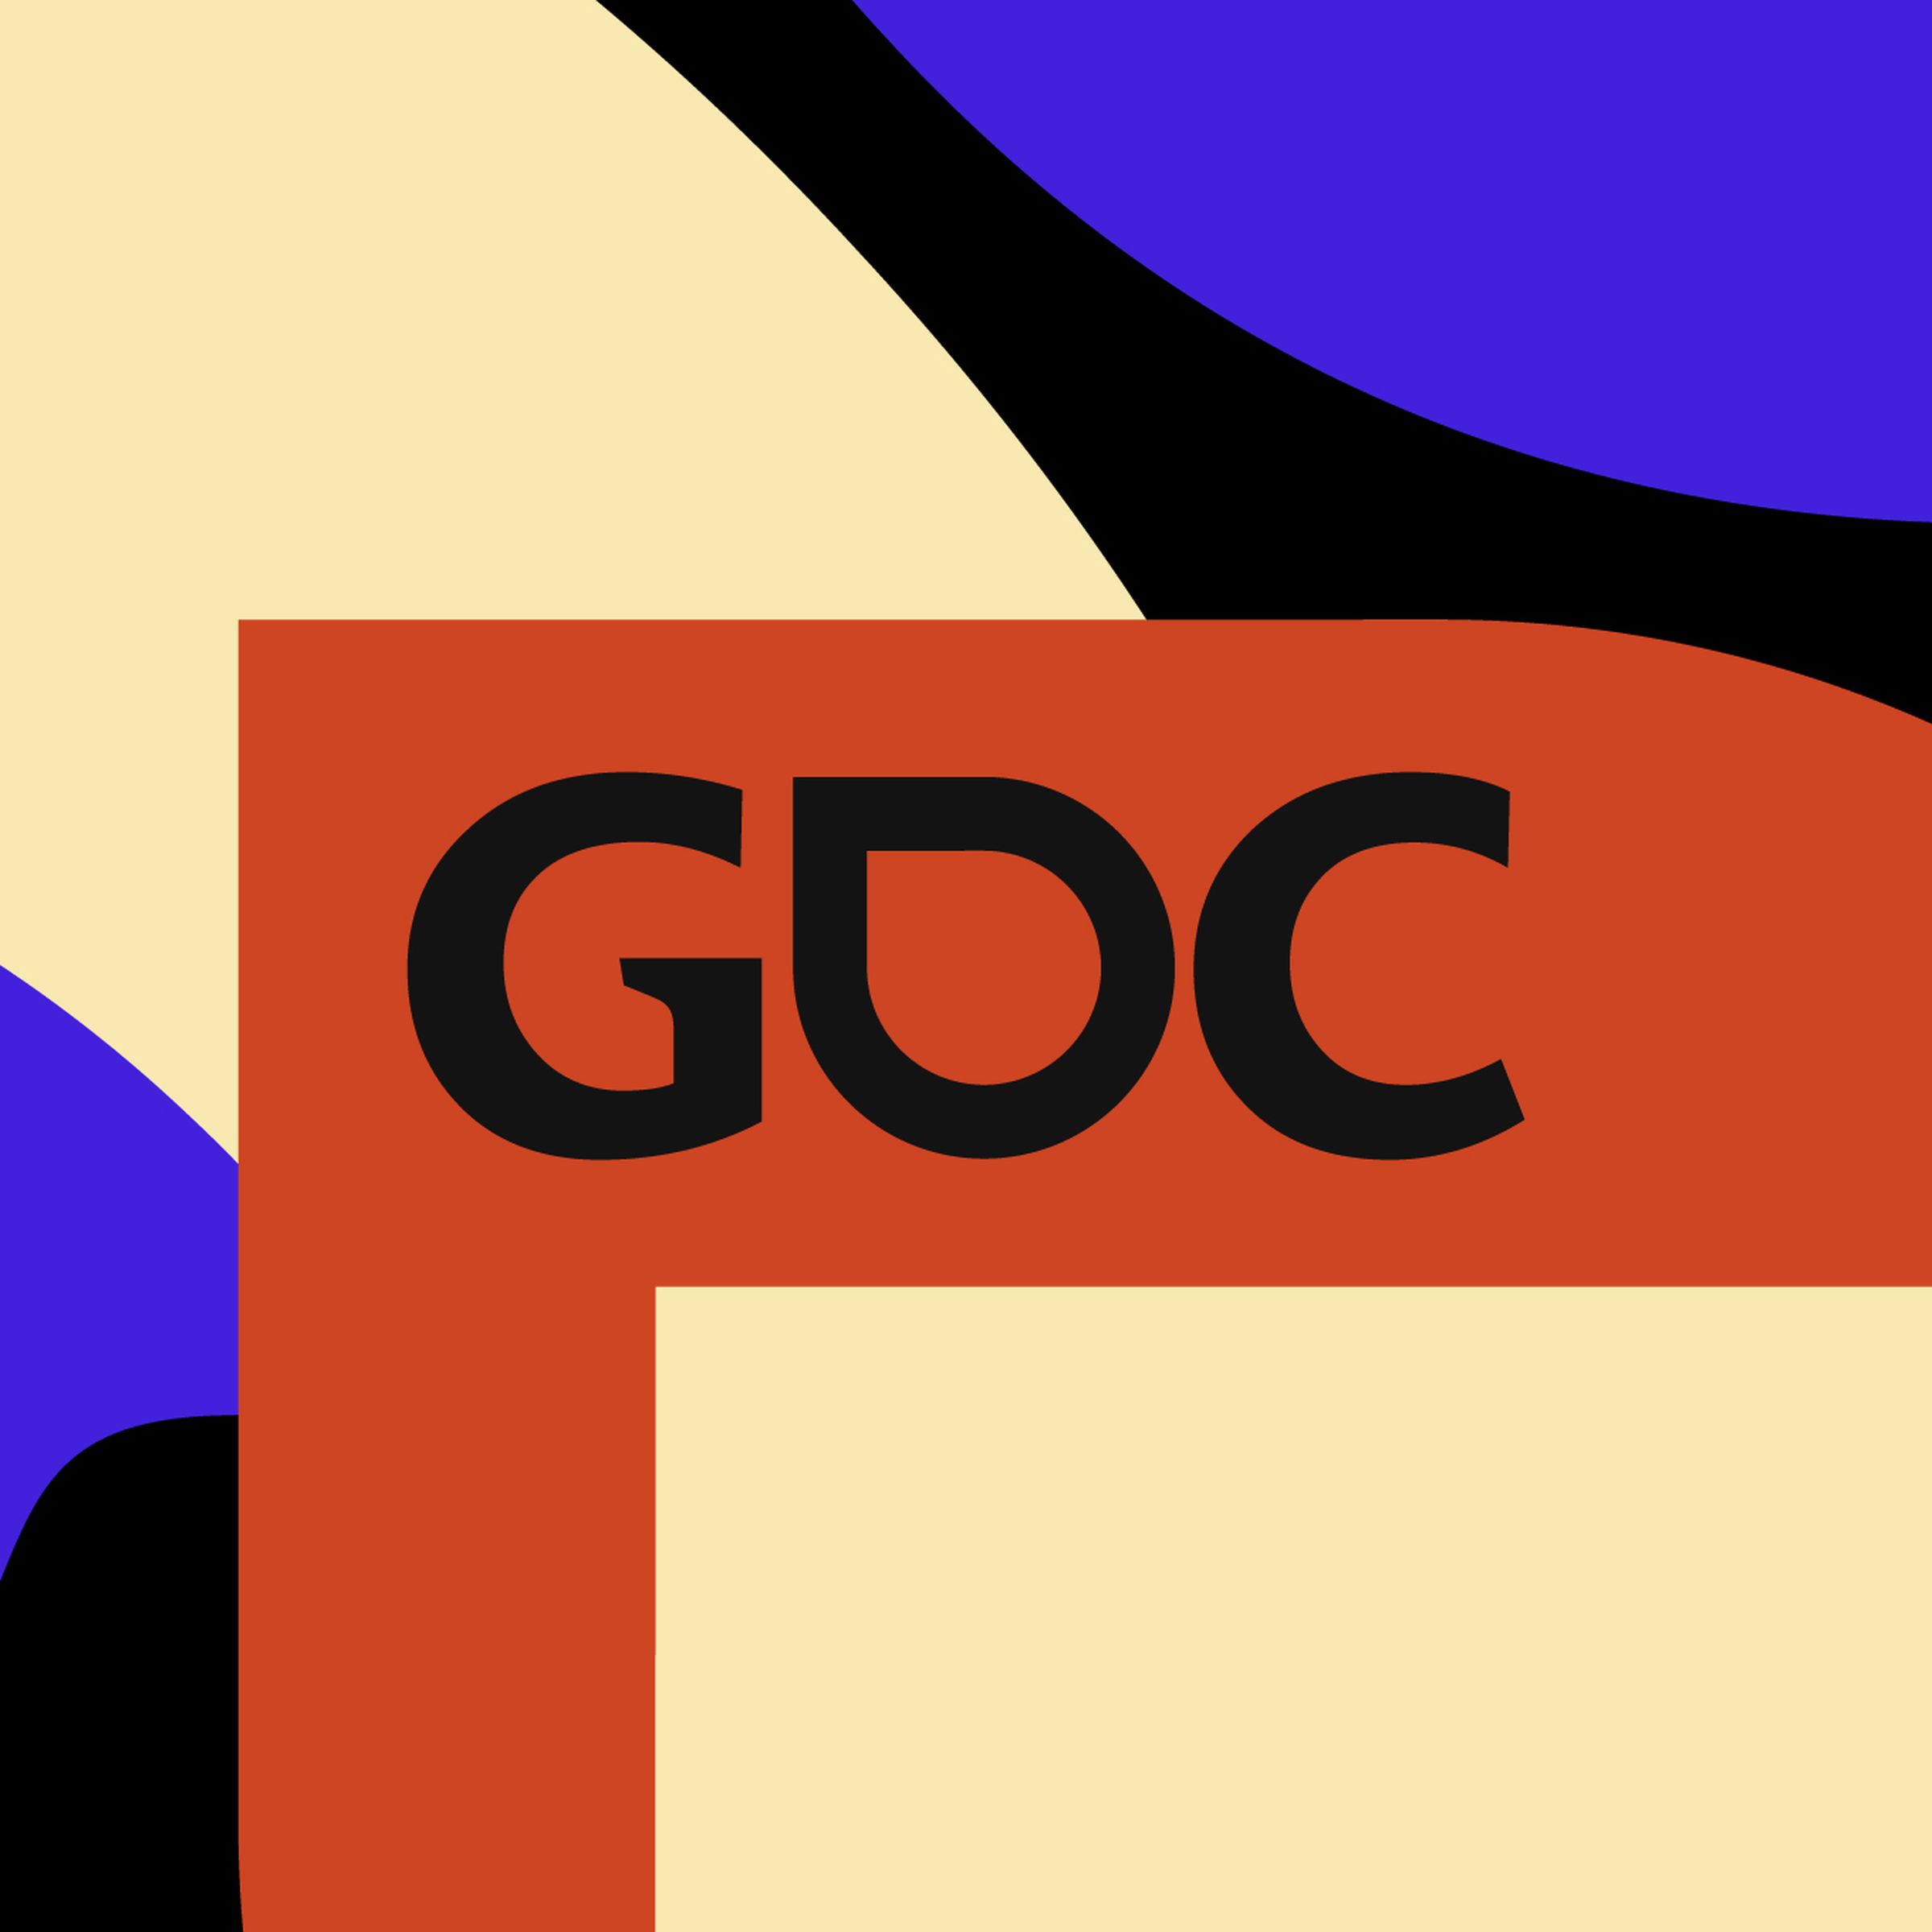 GDC logo over a multi-color illustration